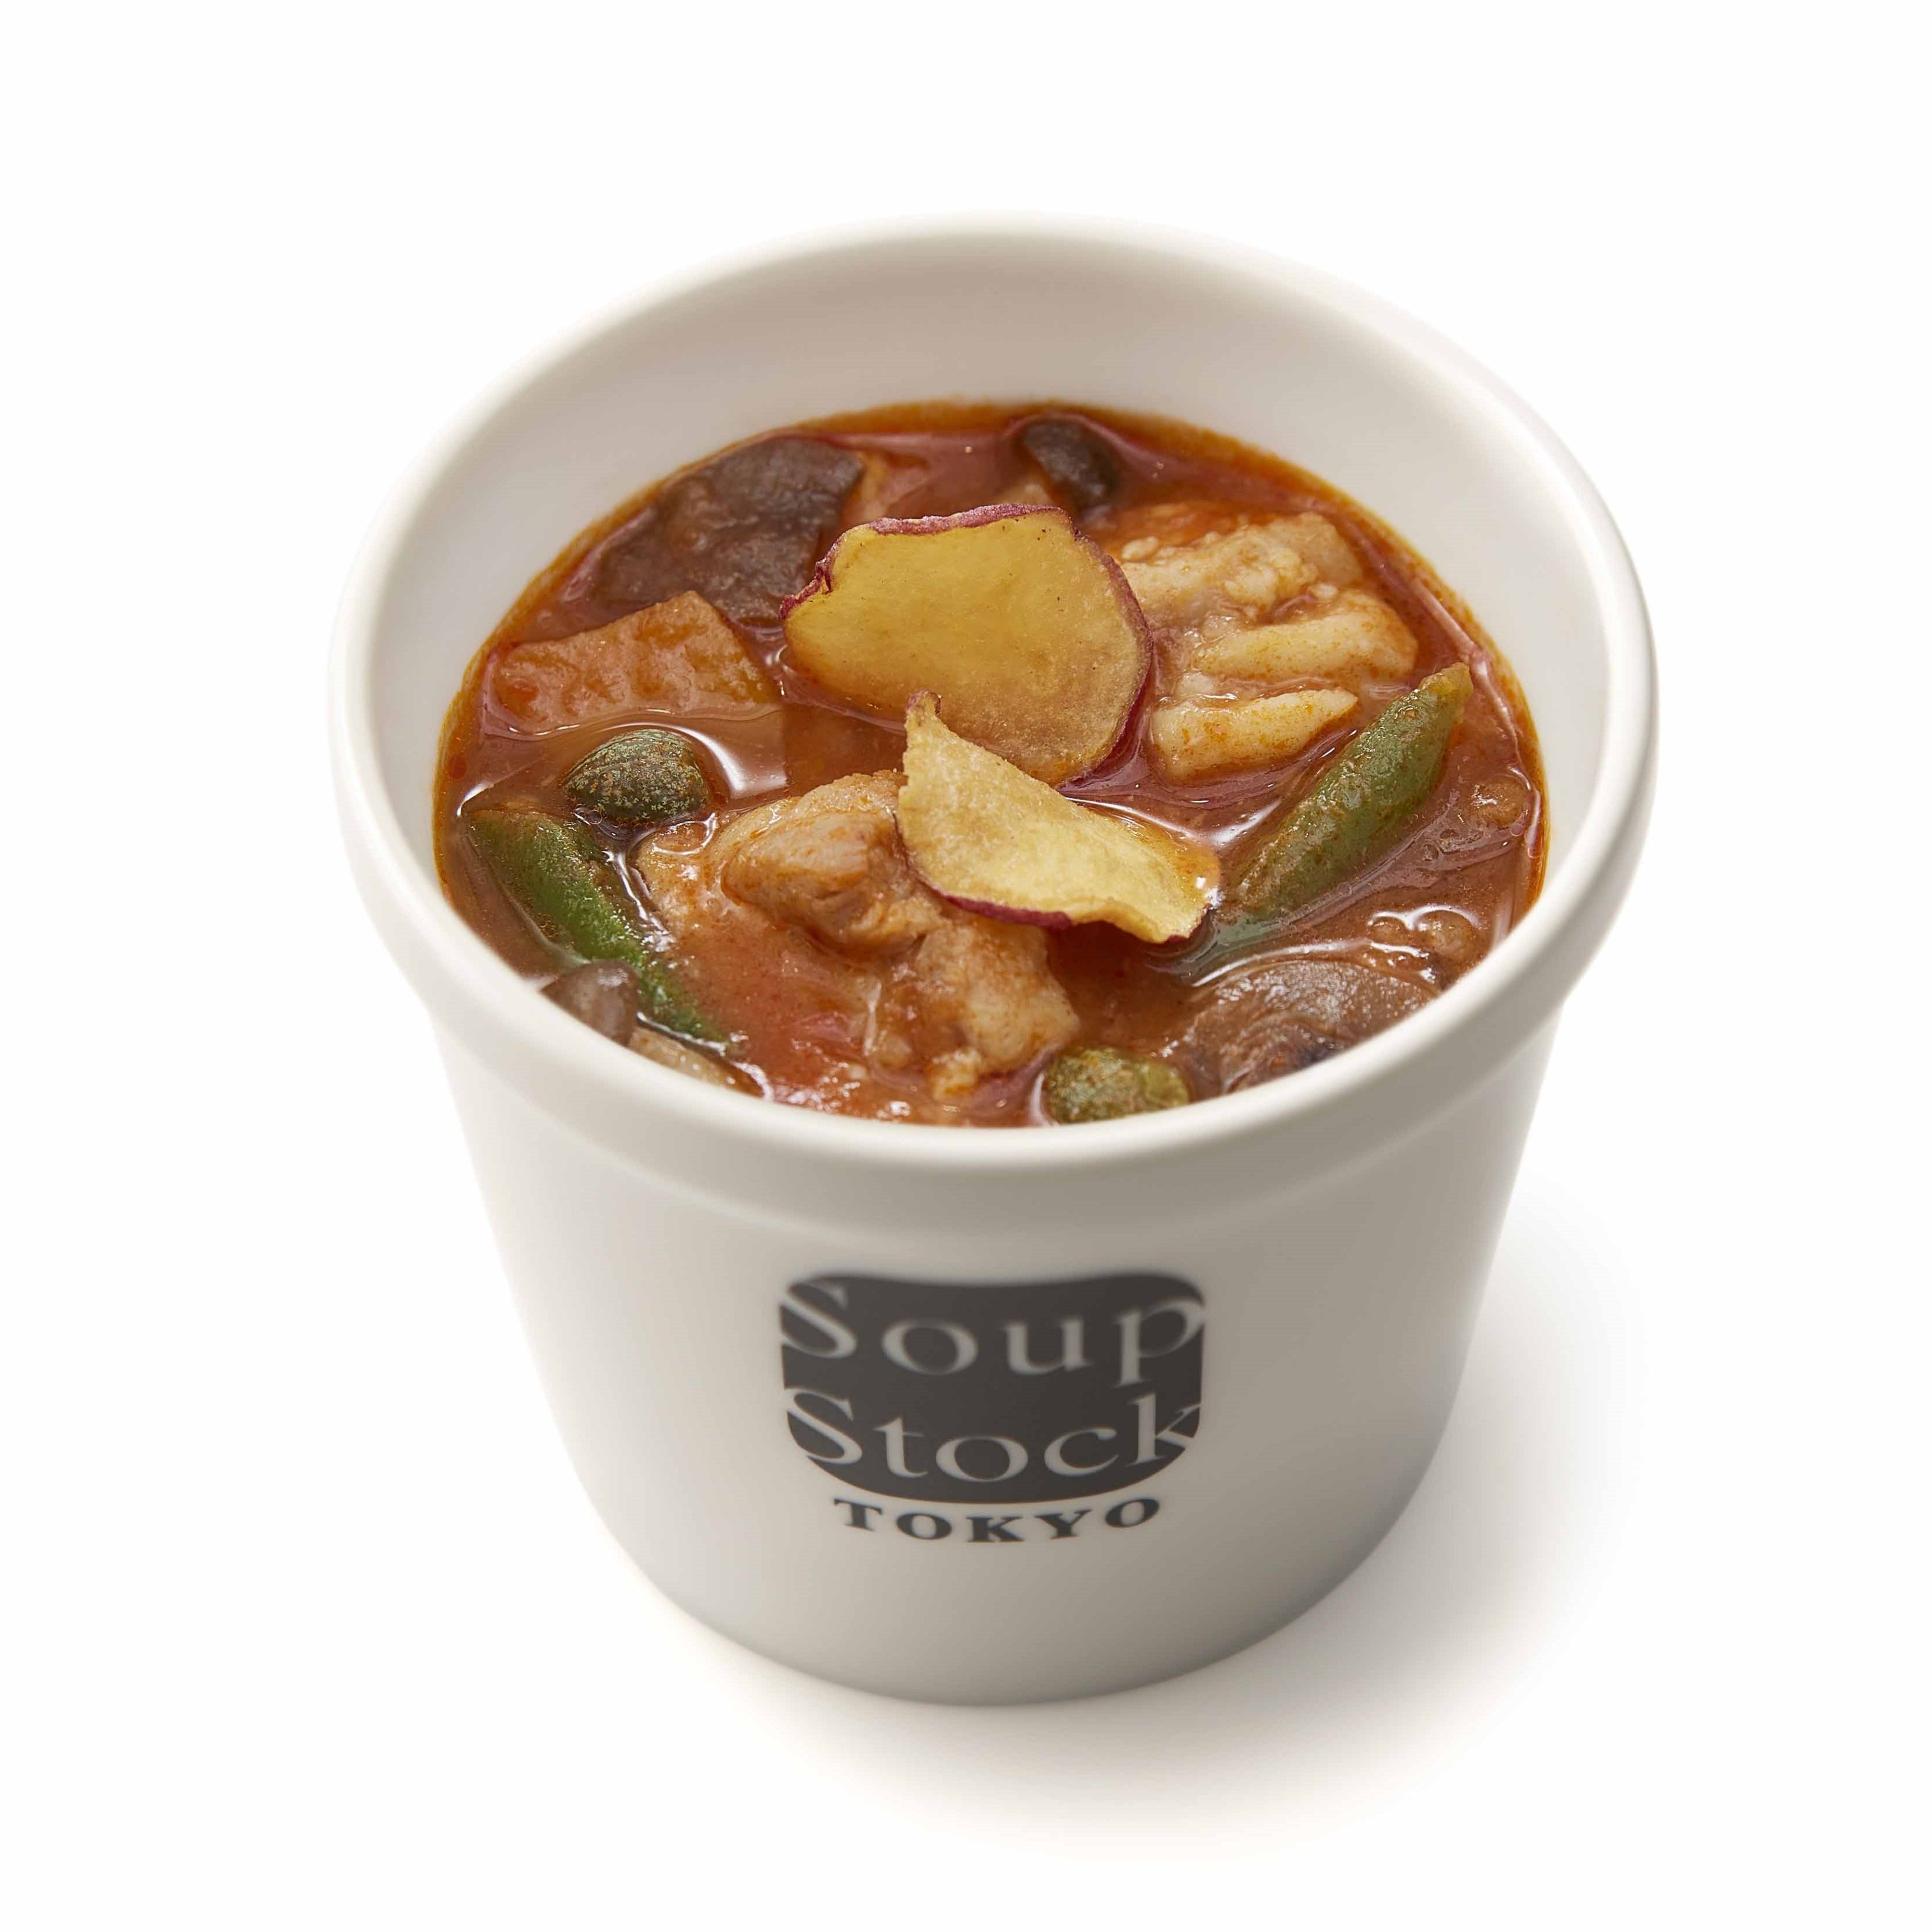 Soup Stock TokyoŊA[g̏HƐH~̏HBuSbz̋ʔK̃X[vvƁuJ`g[vAutF[́g𒍂h̃X[vvP016()珇oB